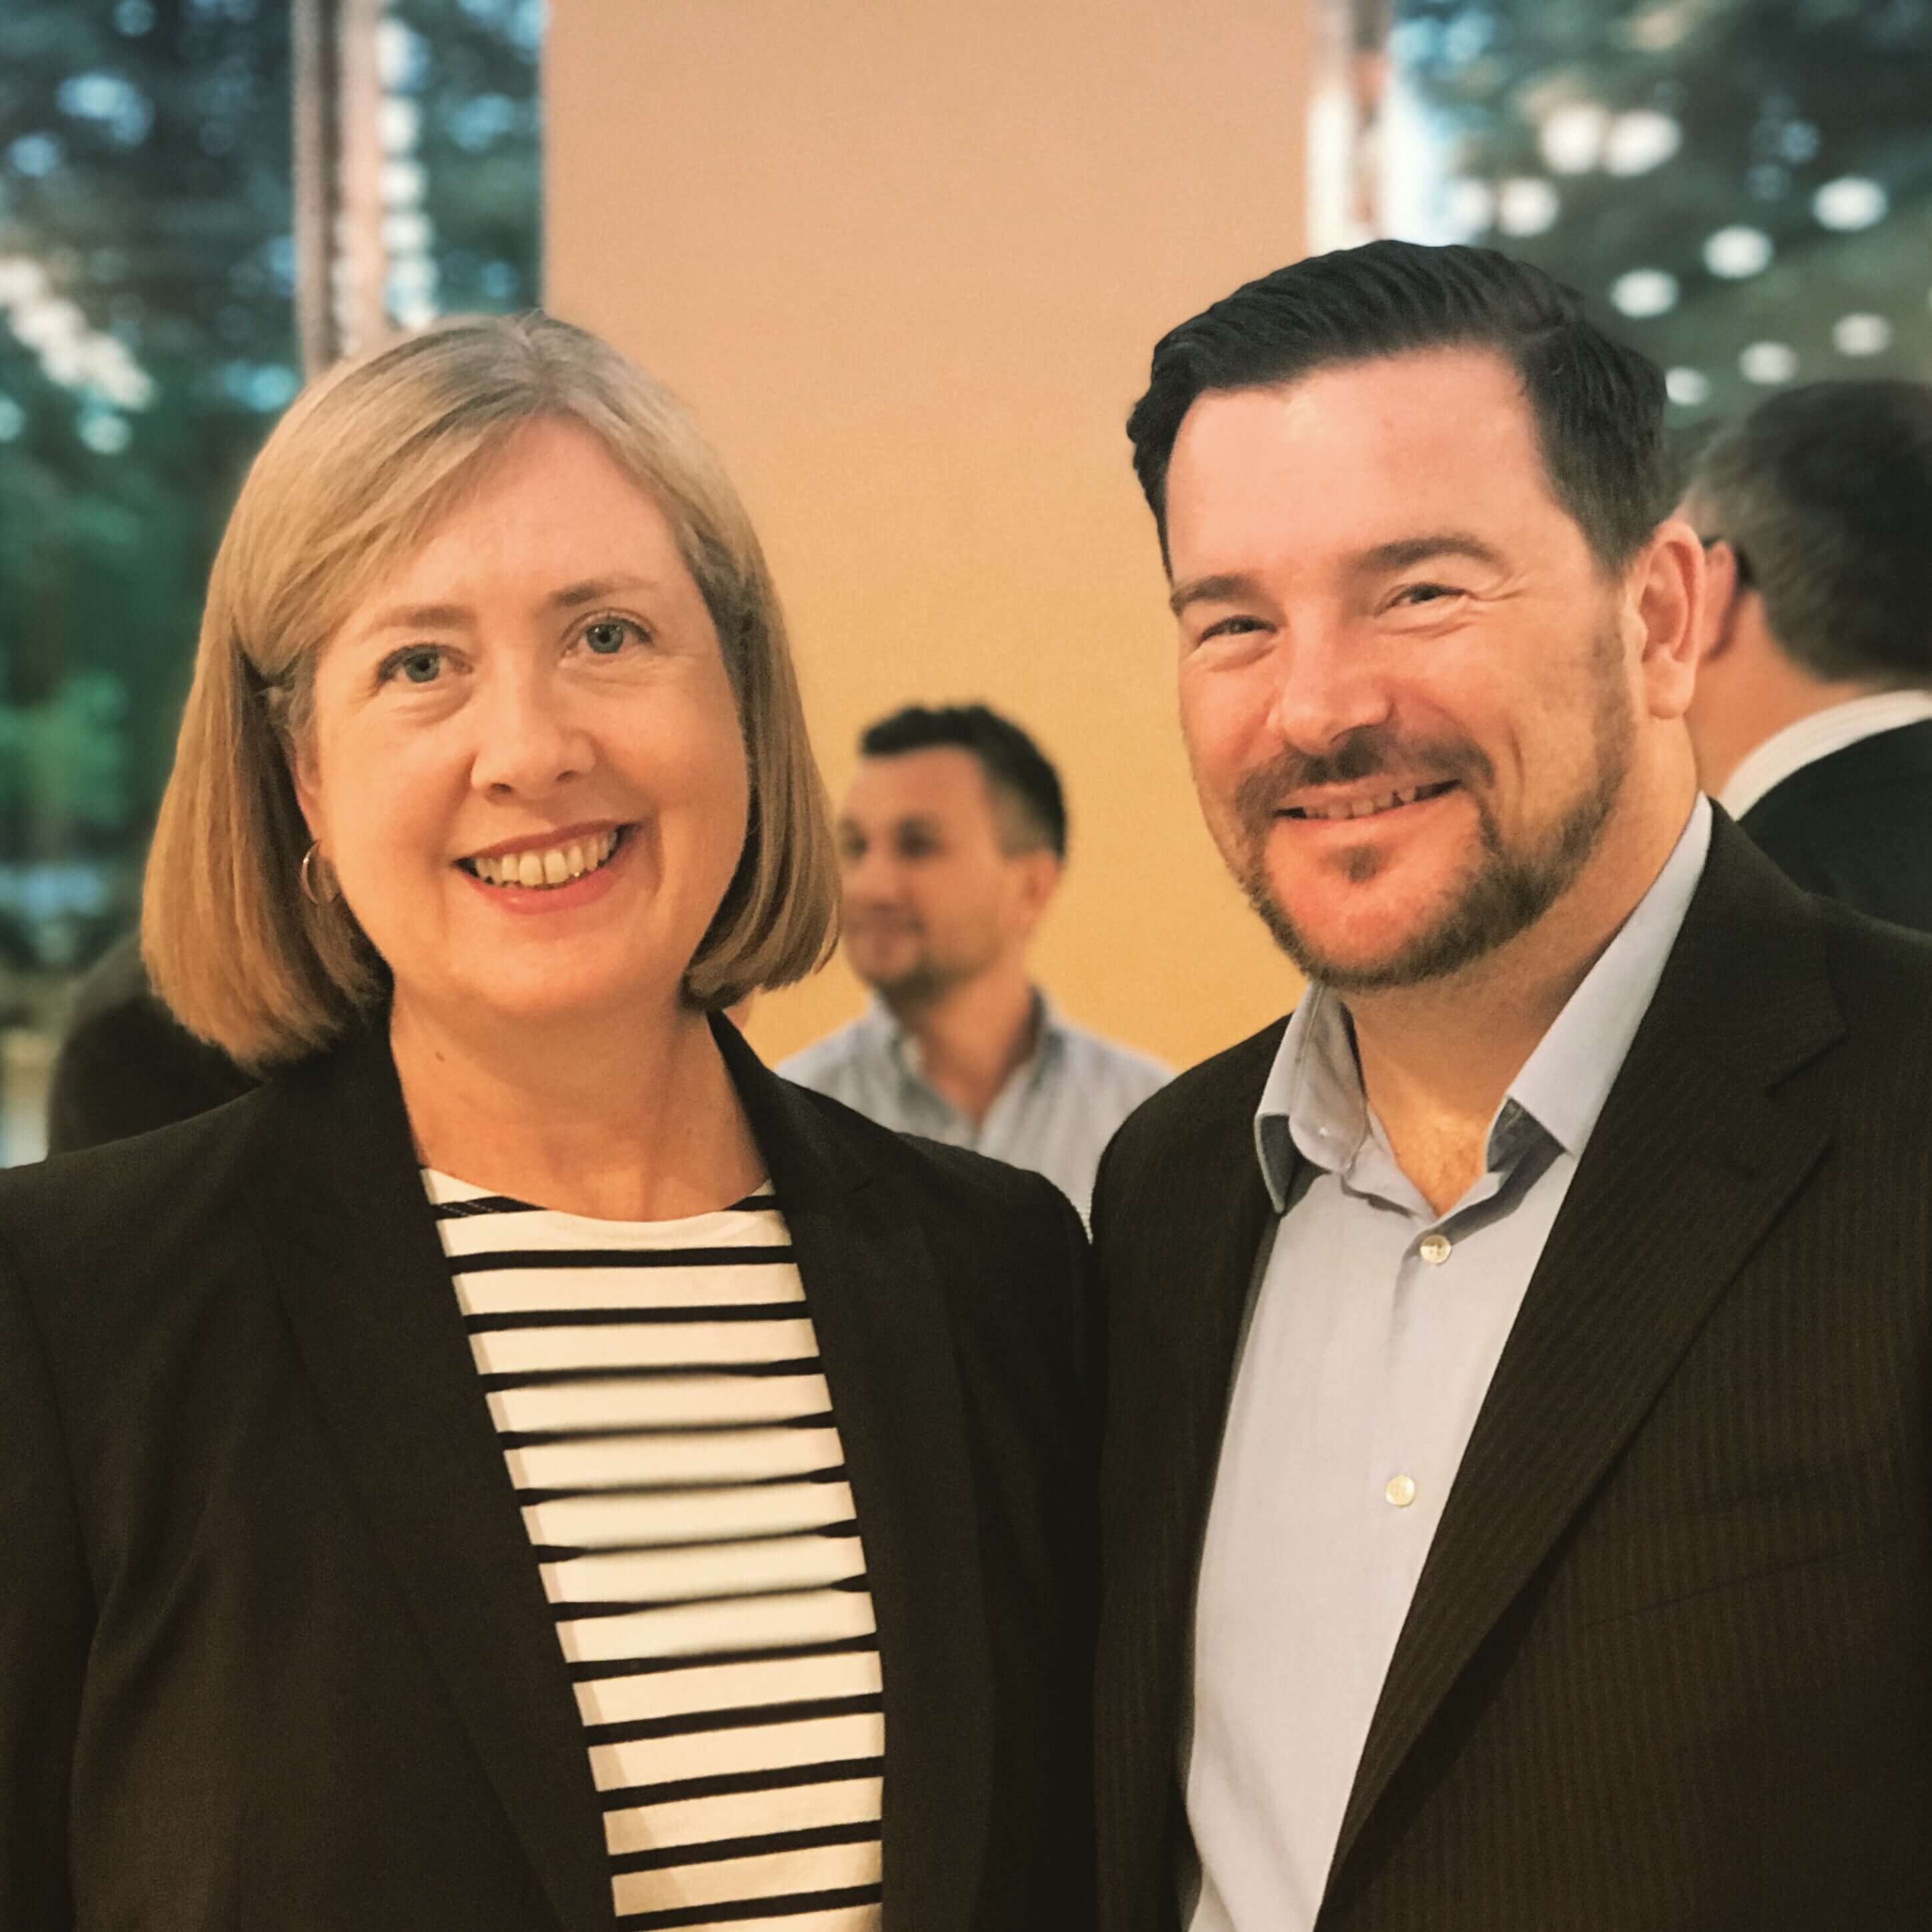 Australian Ambassador in Germany, Lynette Wood, and Executive Director of Link Digital, Steven De Costa